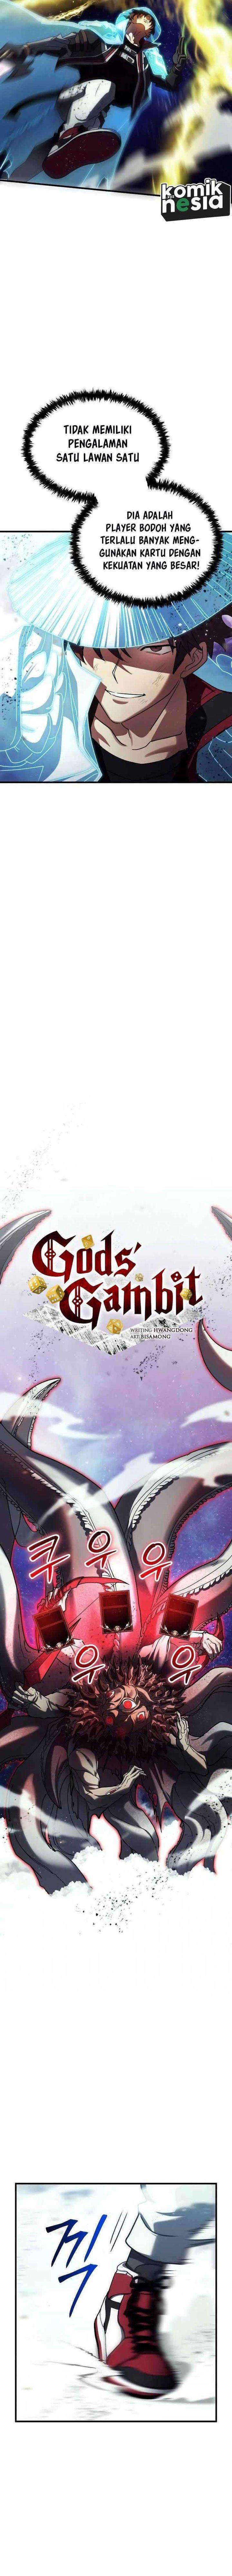 Gods’ Gambit Chapter 32